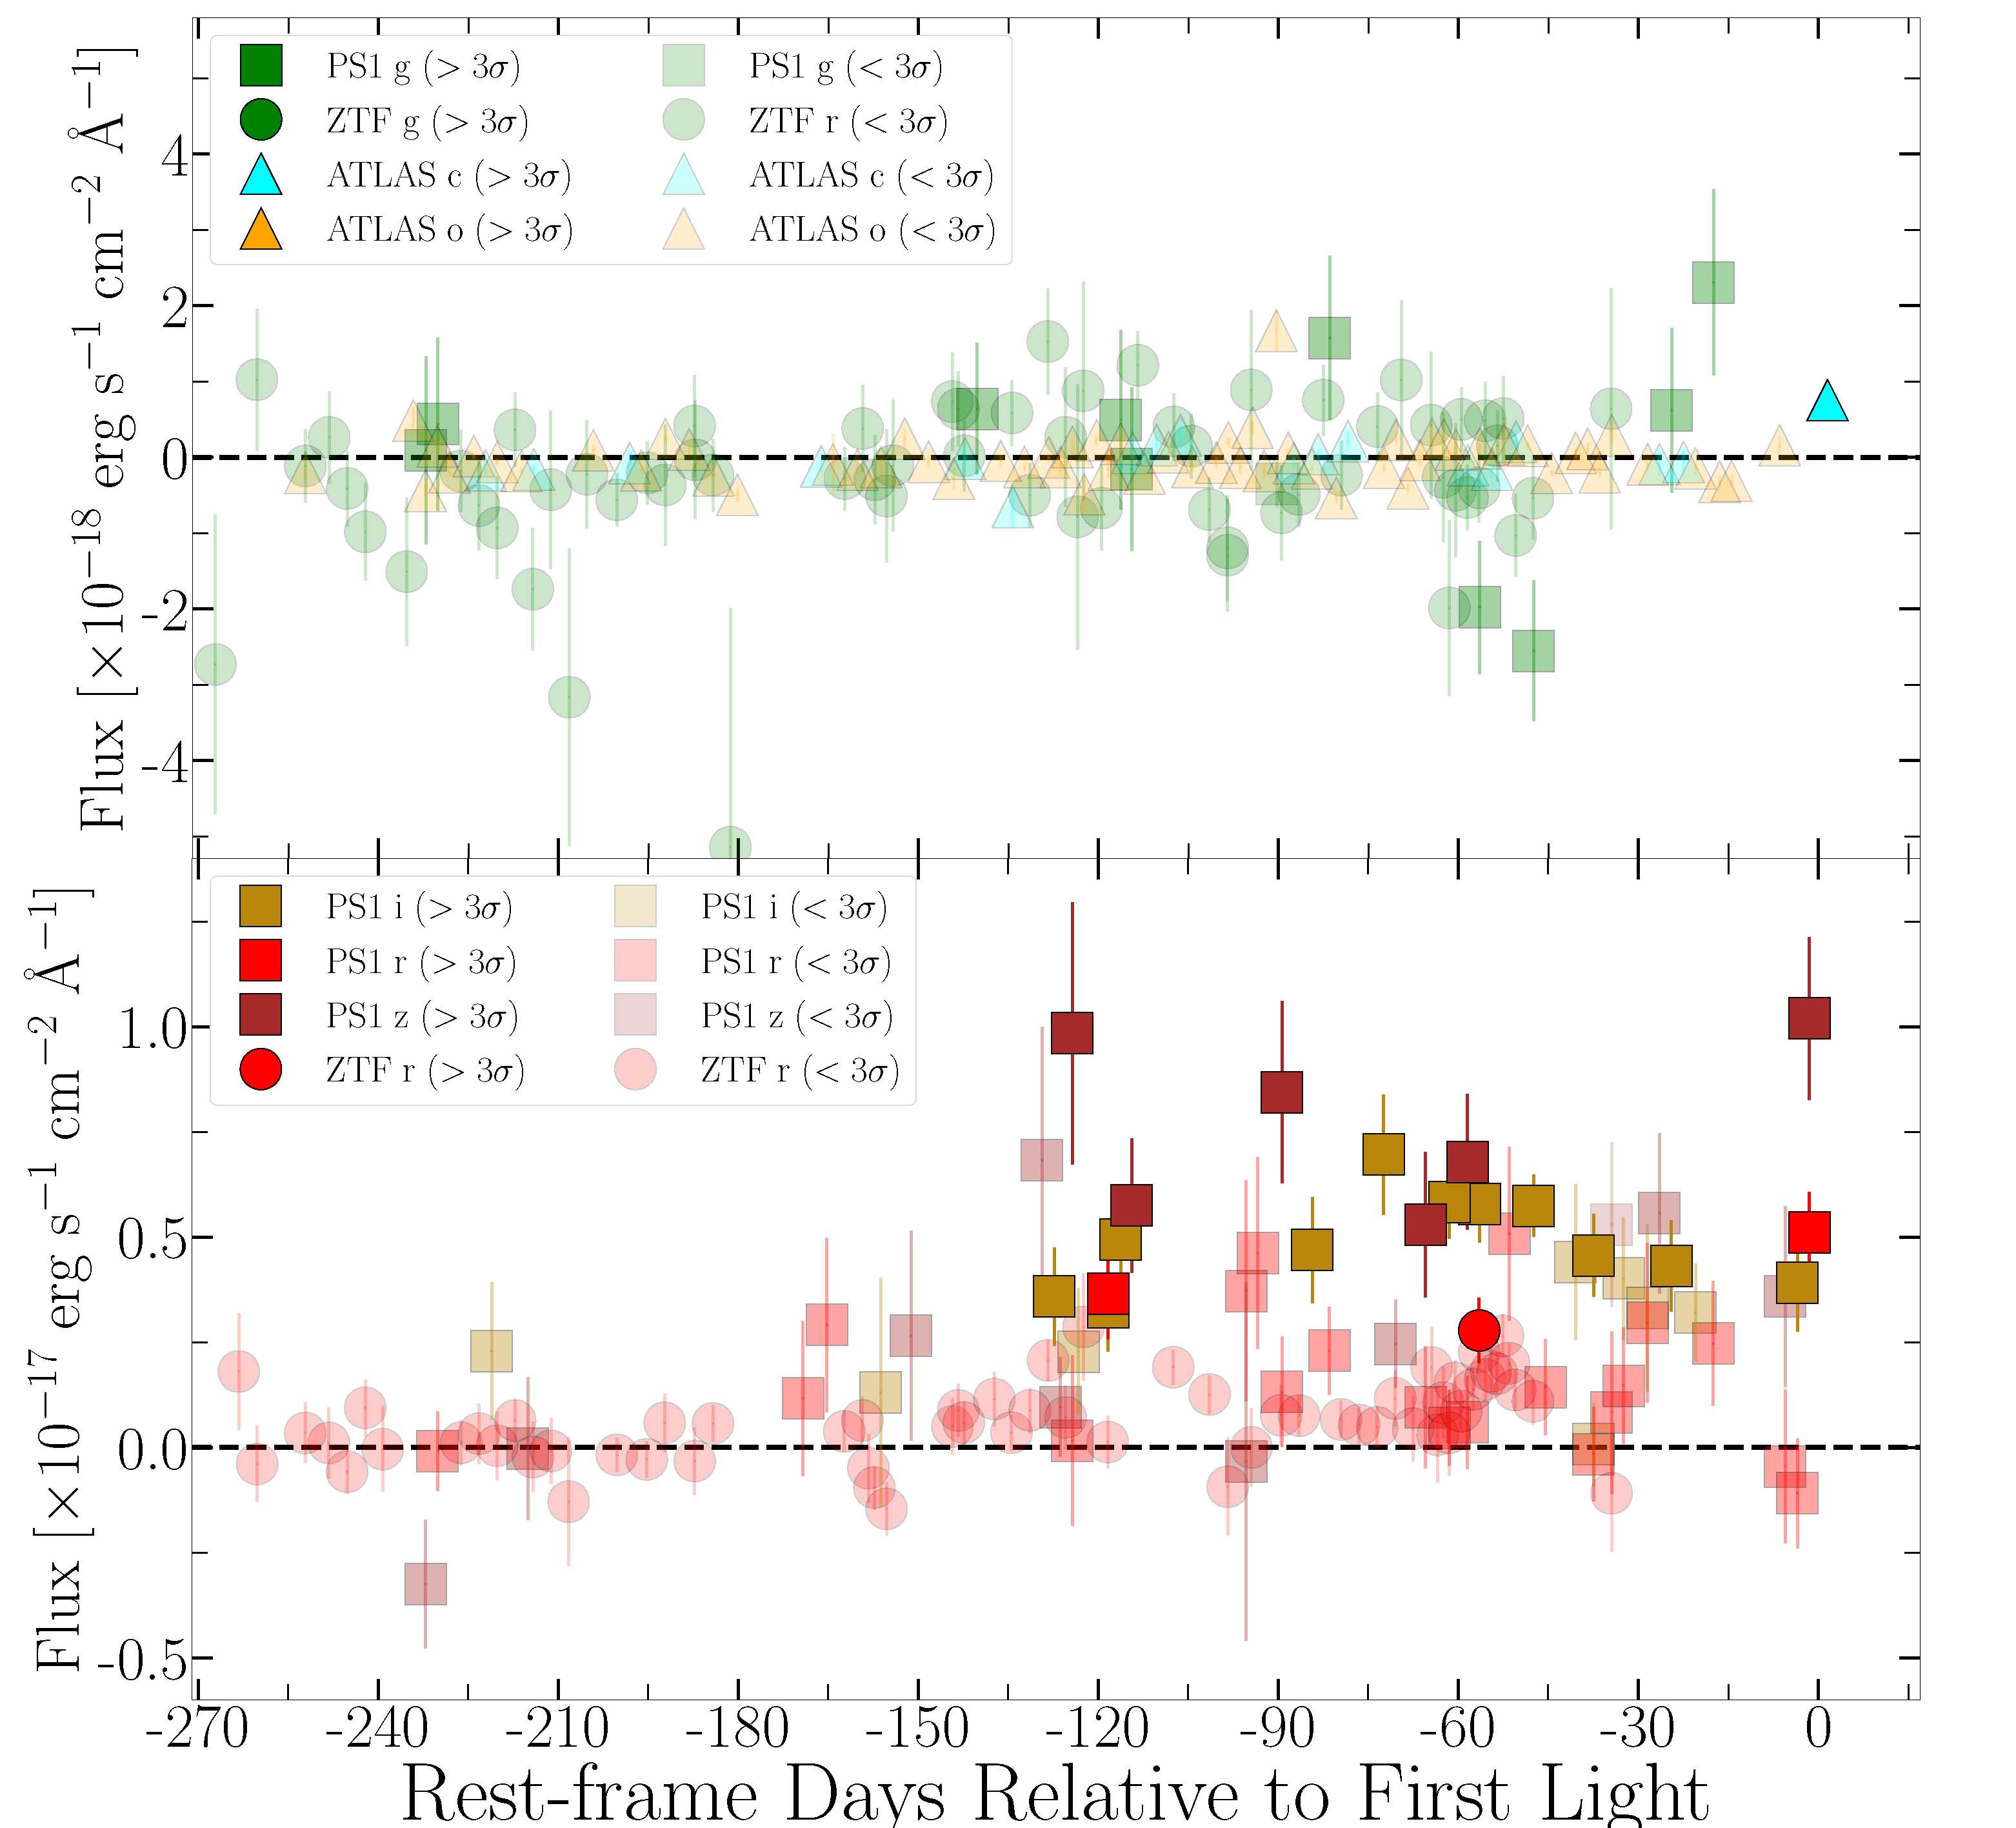 Pan-STARRS望遠鏡監測紅超巨星的活動，主要i和z濾鏡的影像在其爆發前130天內皆有偵測到光度變化。圖片摘自Jacobson-Galán et al. (2022)。